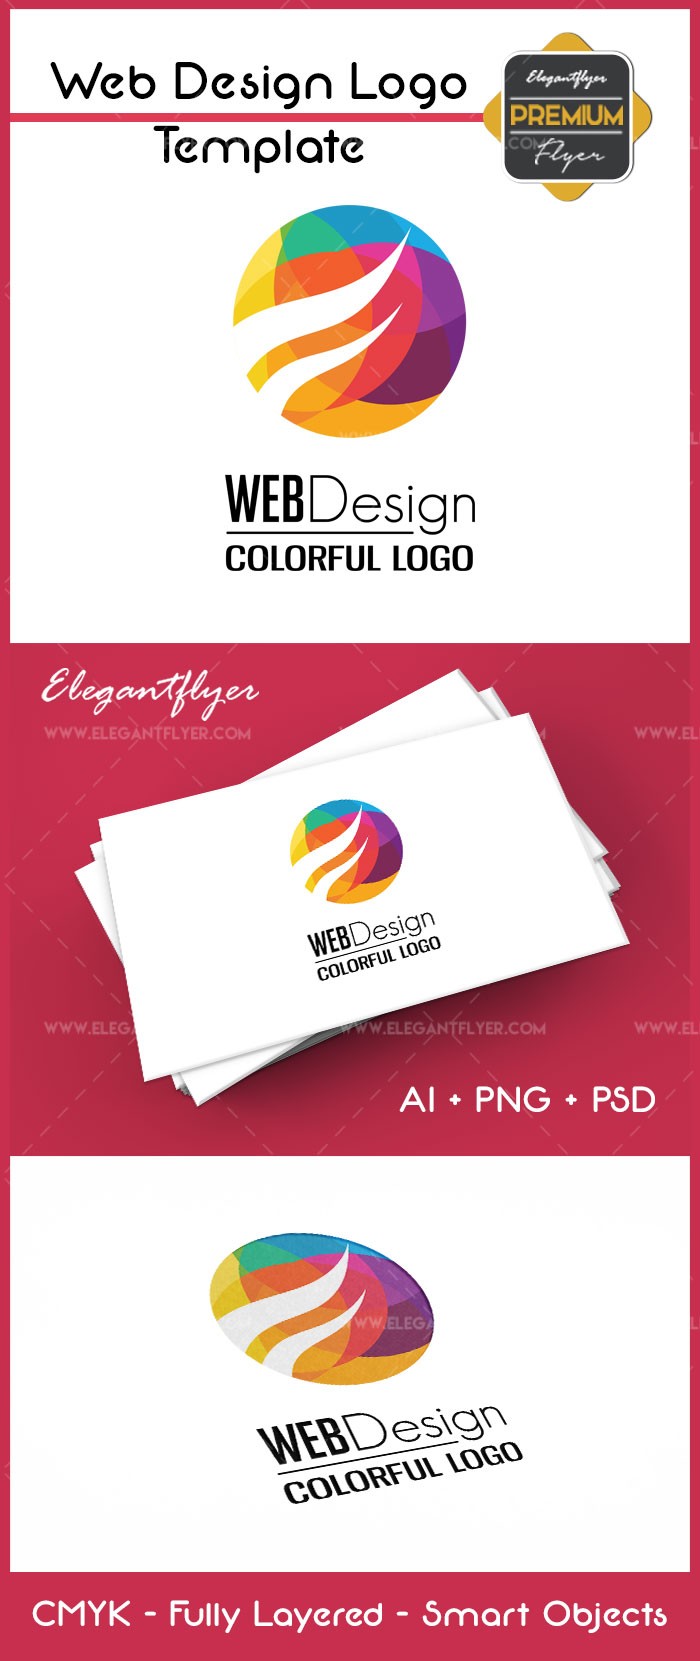 Web Design by ElegantFlyer